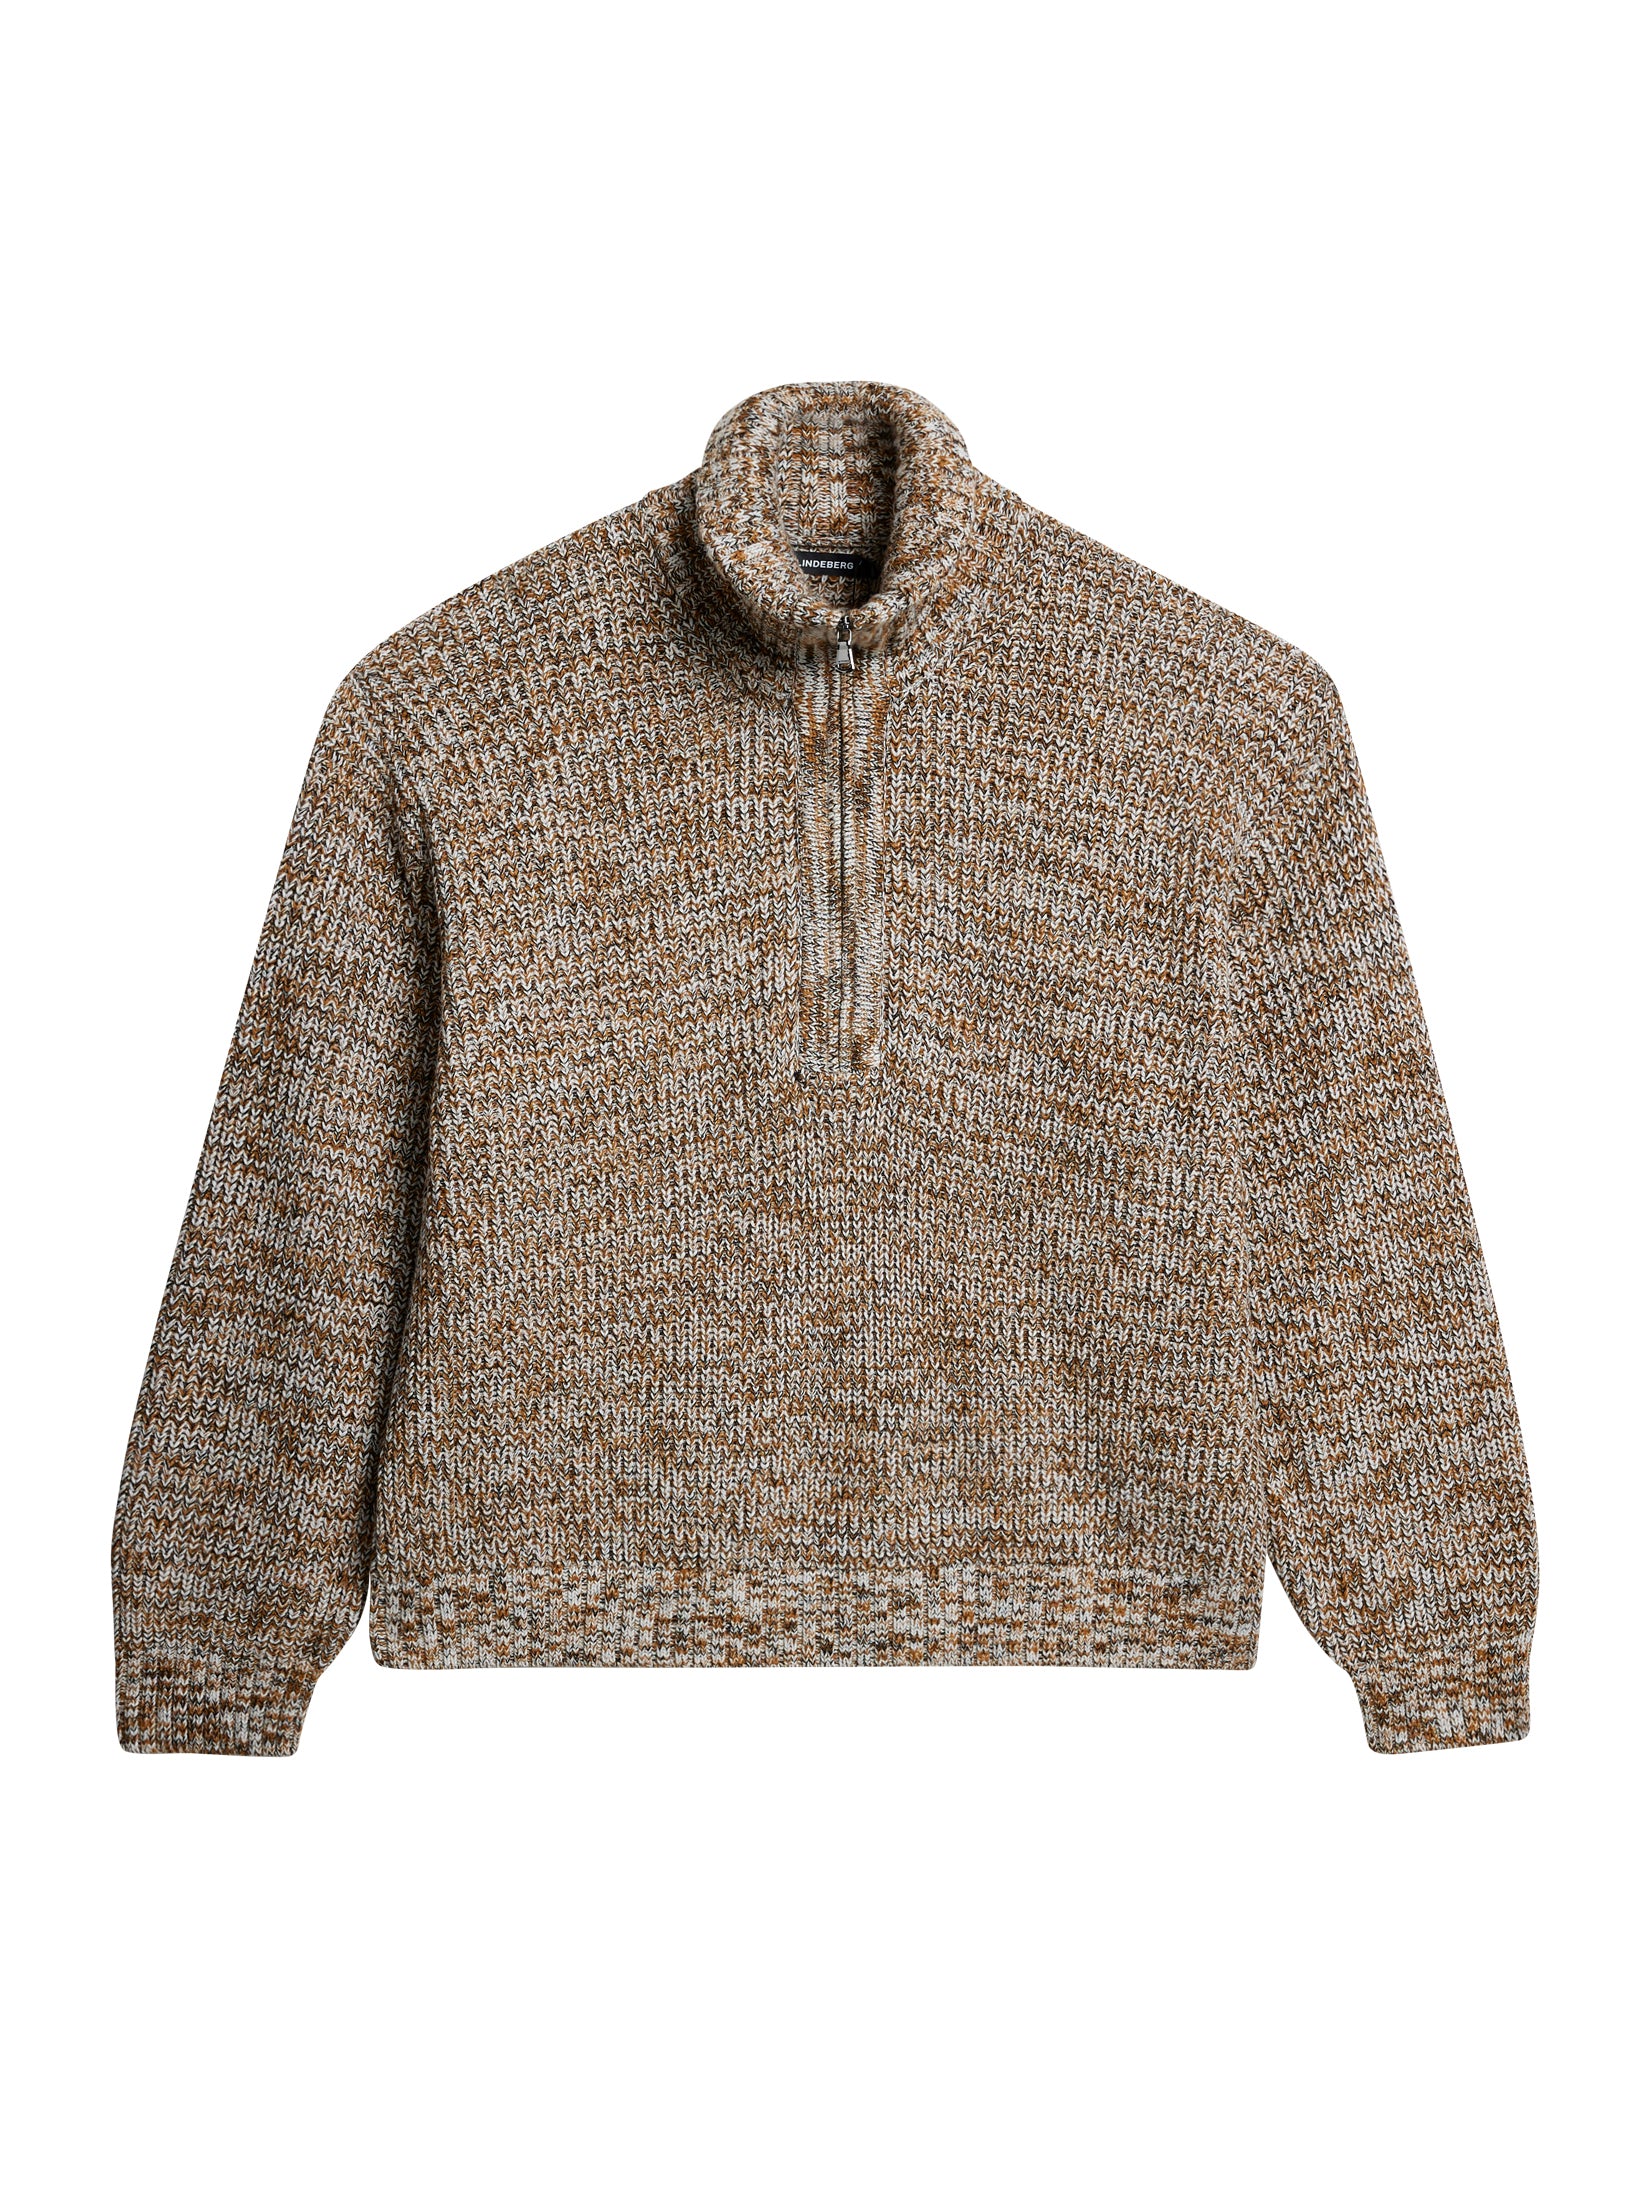 Chester Jacquard Quarter Zip Sweater